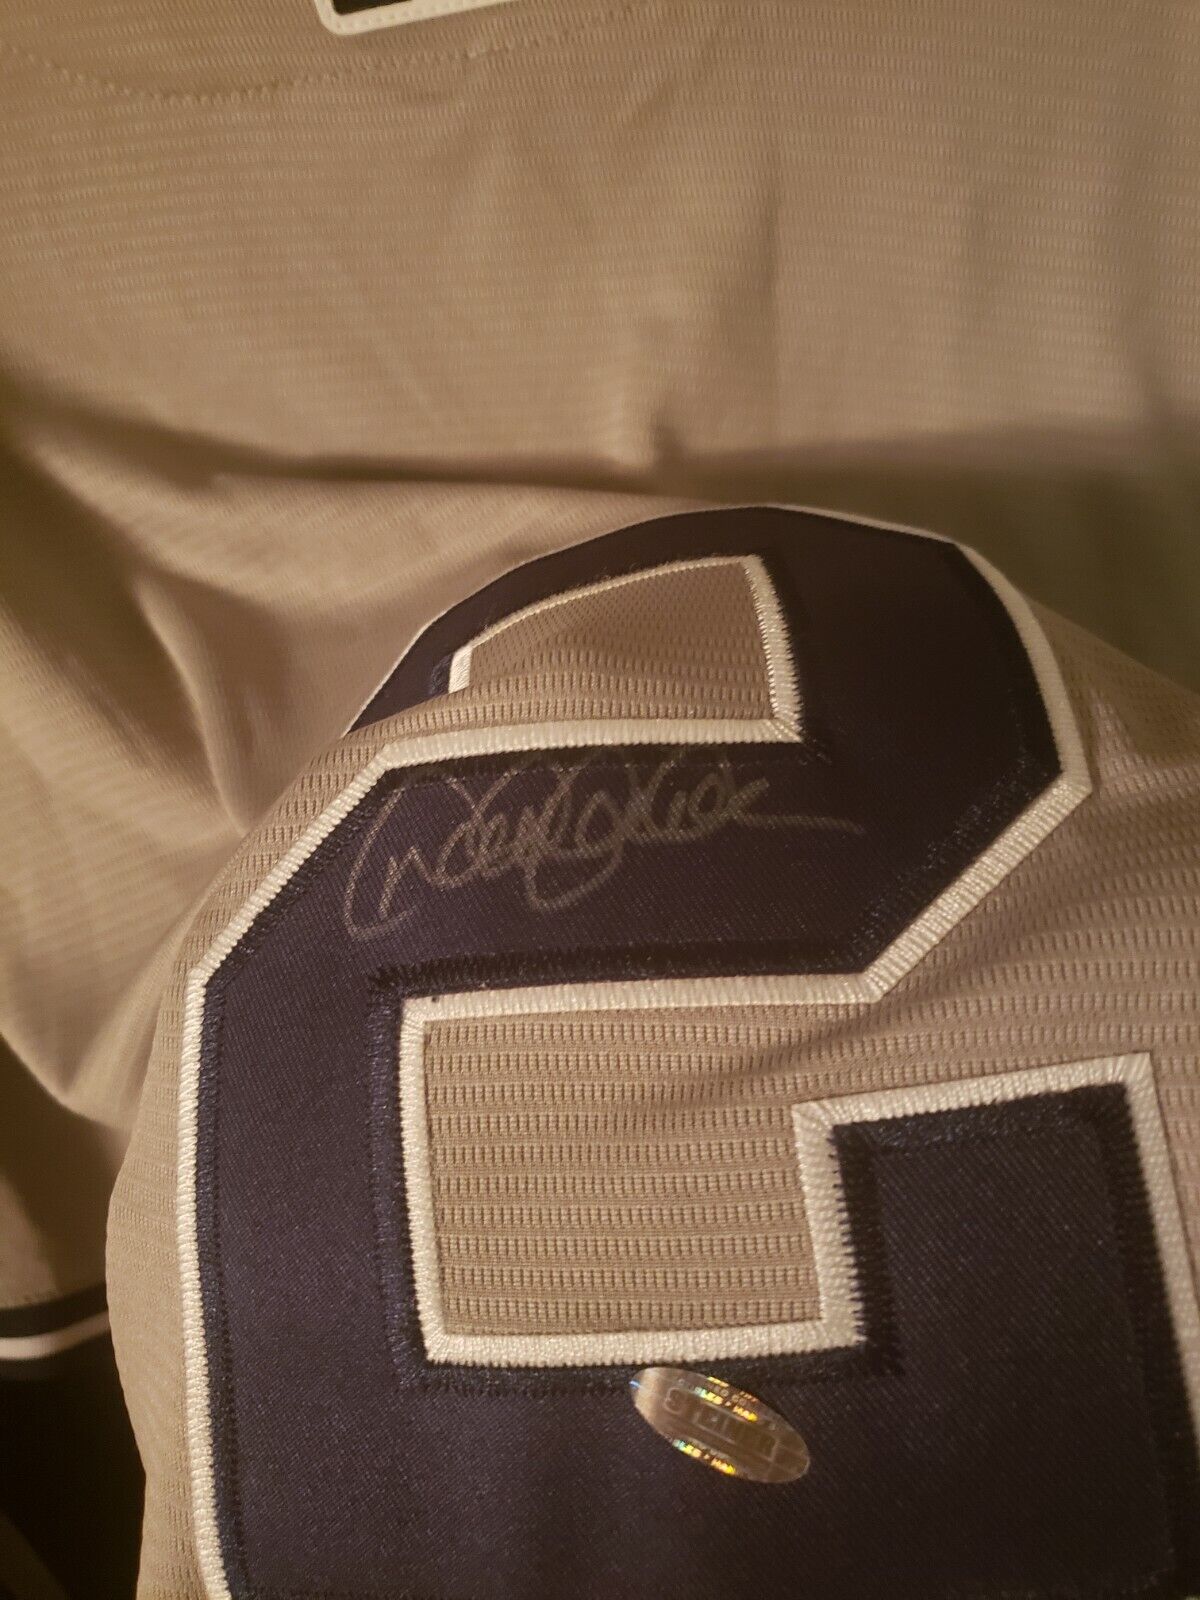 Dwrek Jeter Autographed Signed Jersey - Steiner